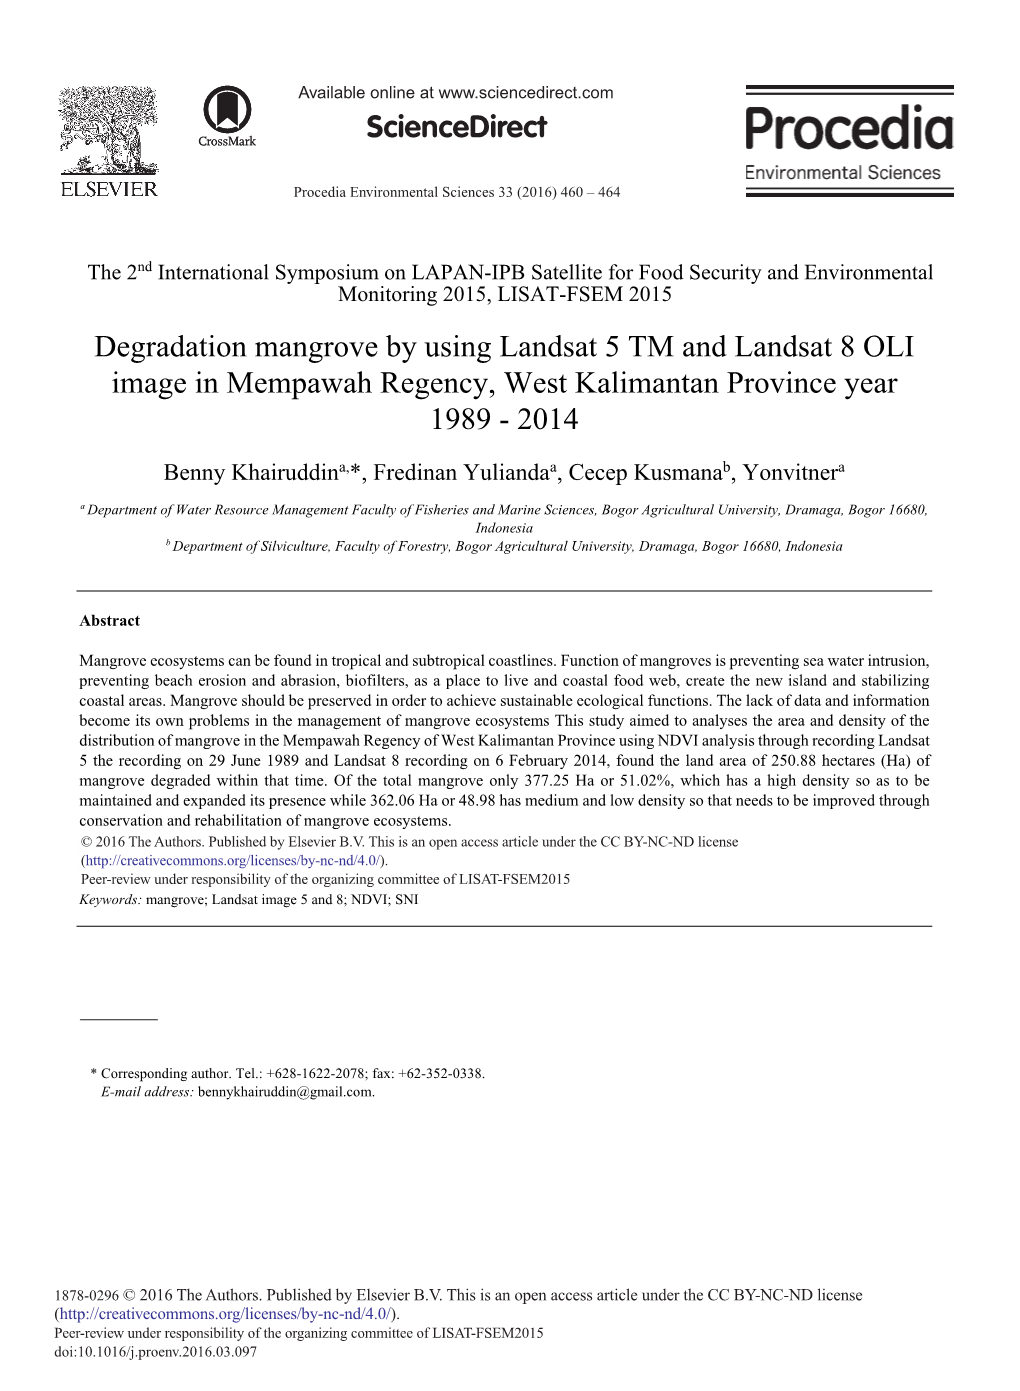 Degradation Mangrove by Using Landsat 5 TM and Landsat 8 OLI Image in Mempawah Regency, West Kalimantan Province Year 1989 - 2014